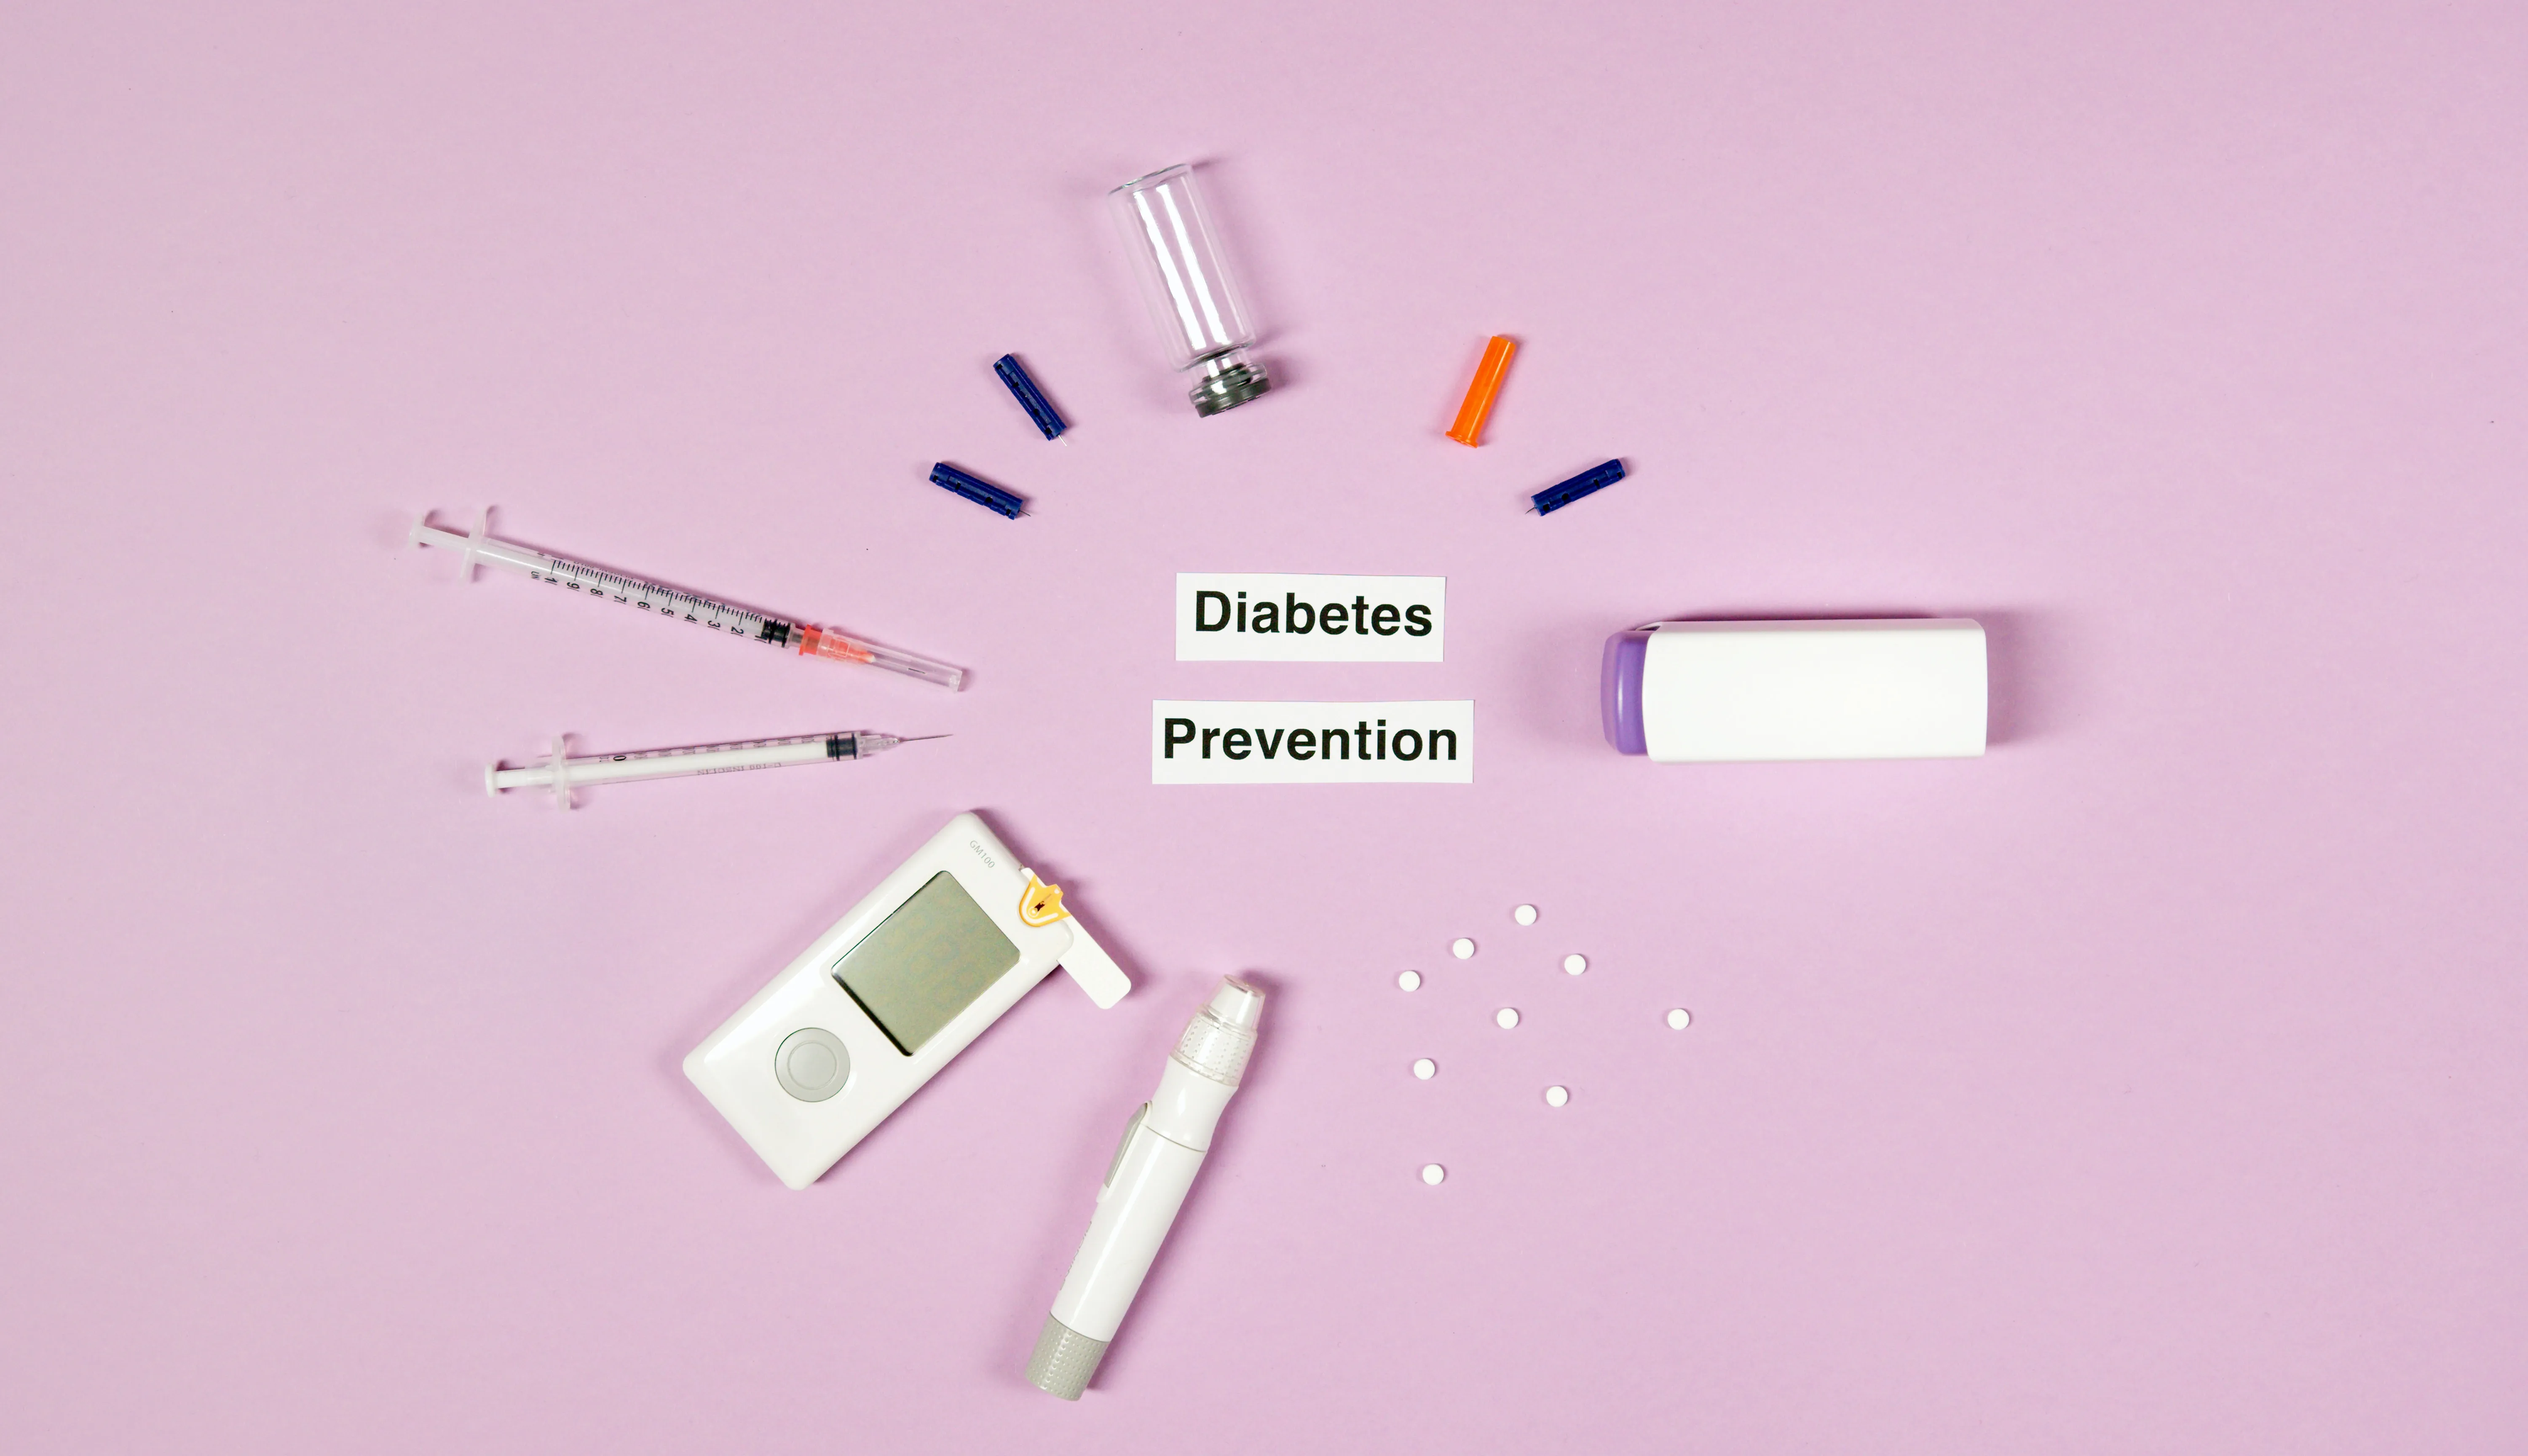 Diabetes medications